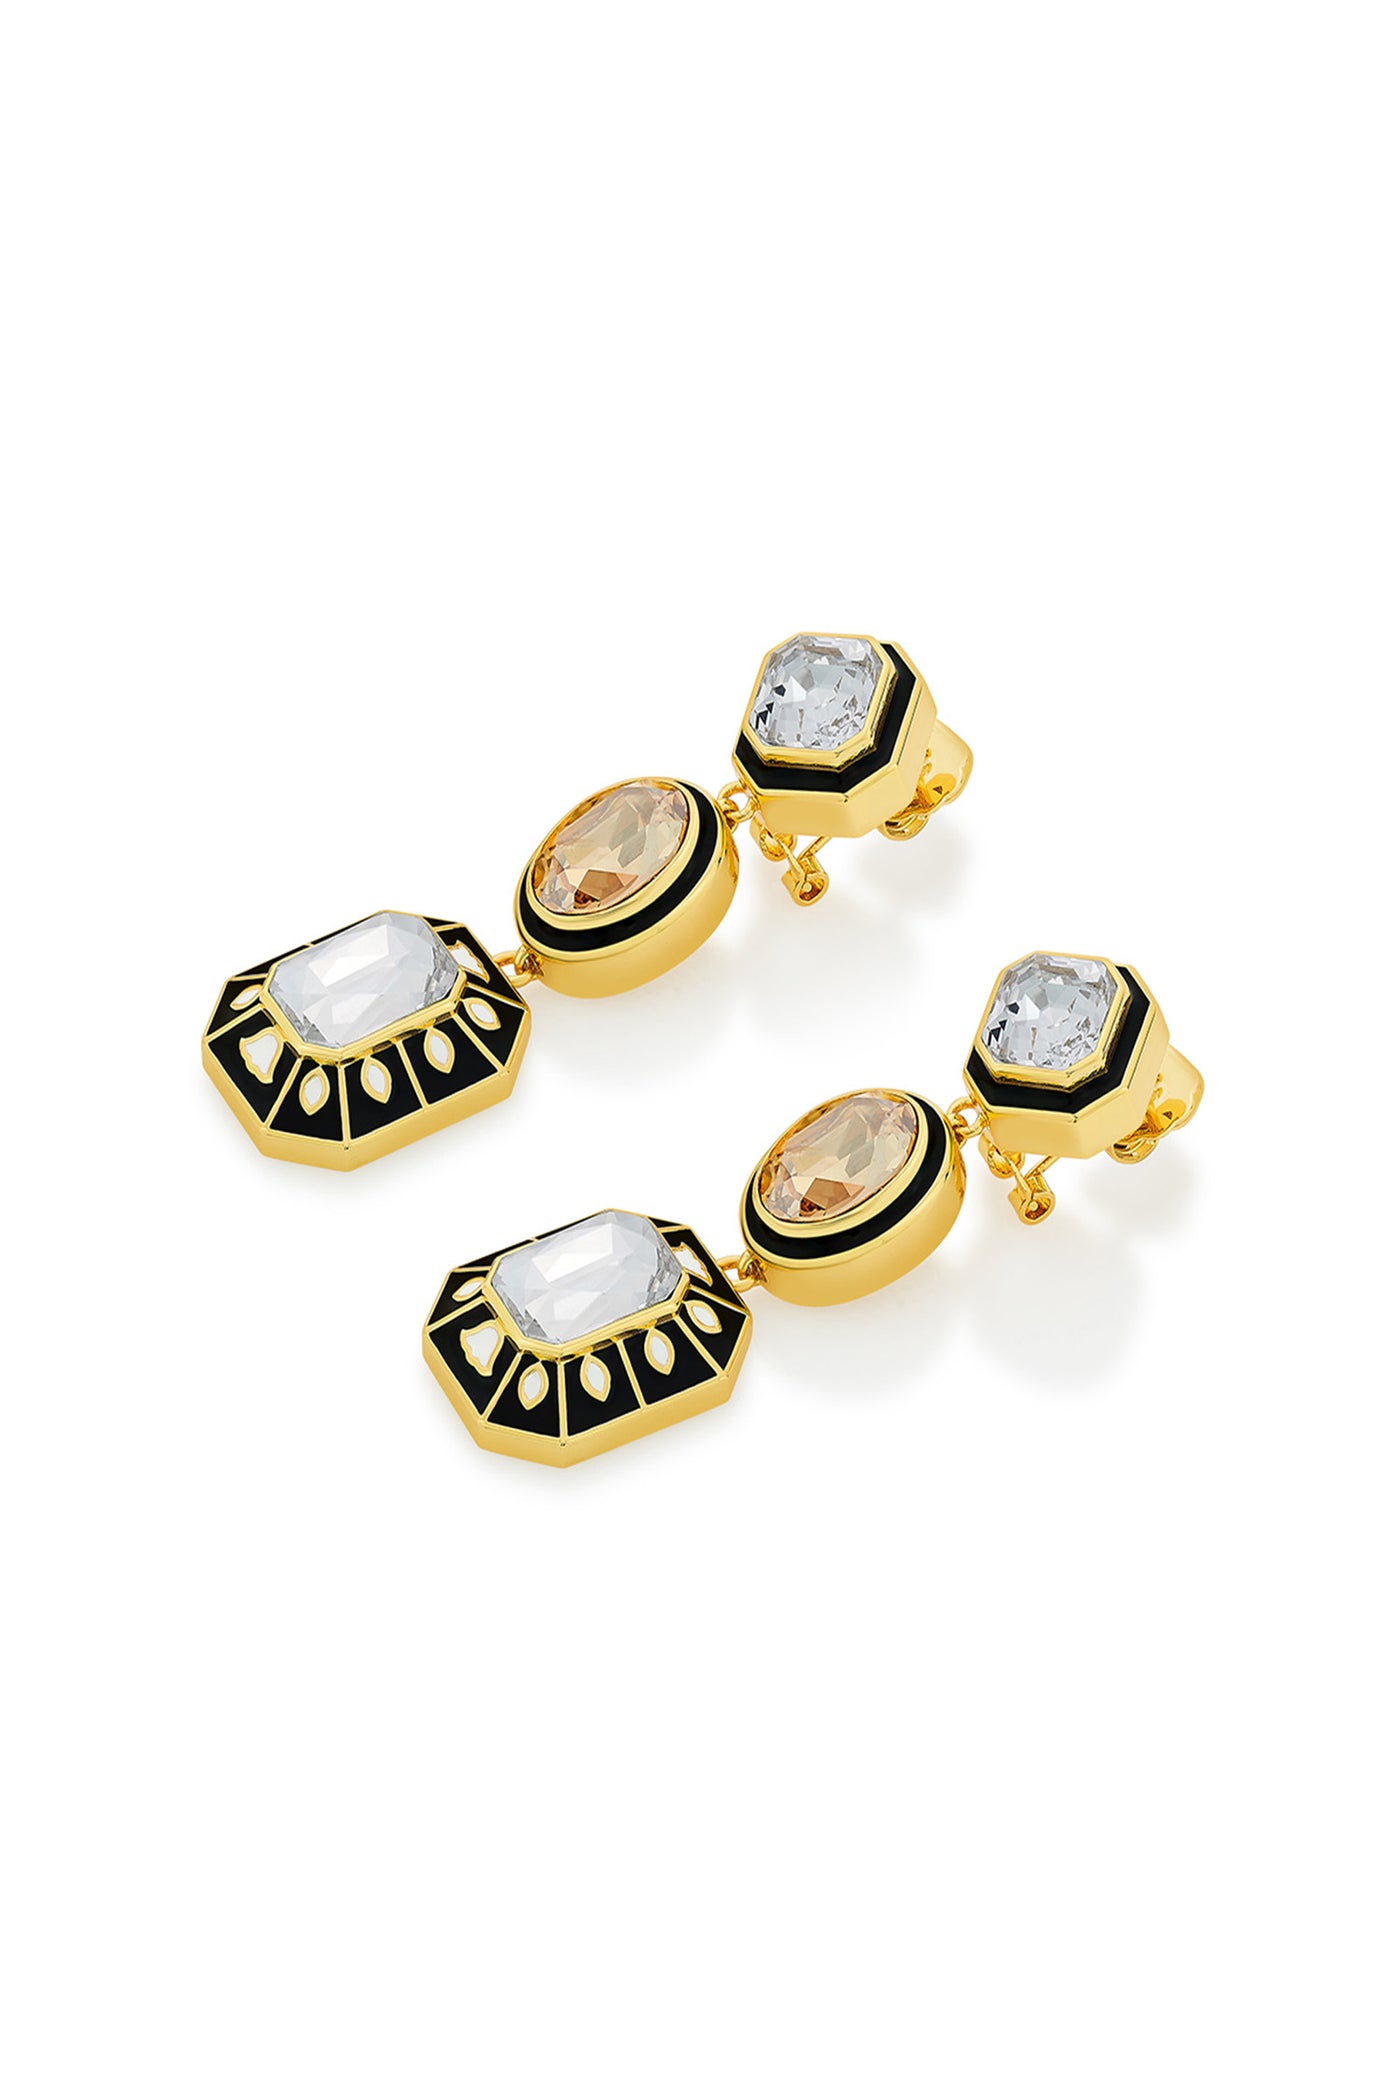 Isharya Blaze Multi Crystal Dangler Earrings In 18Kt Gold Plated fashion jewellery online shopping melange singapore indian designer wear